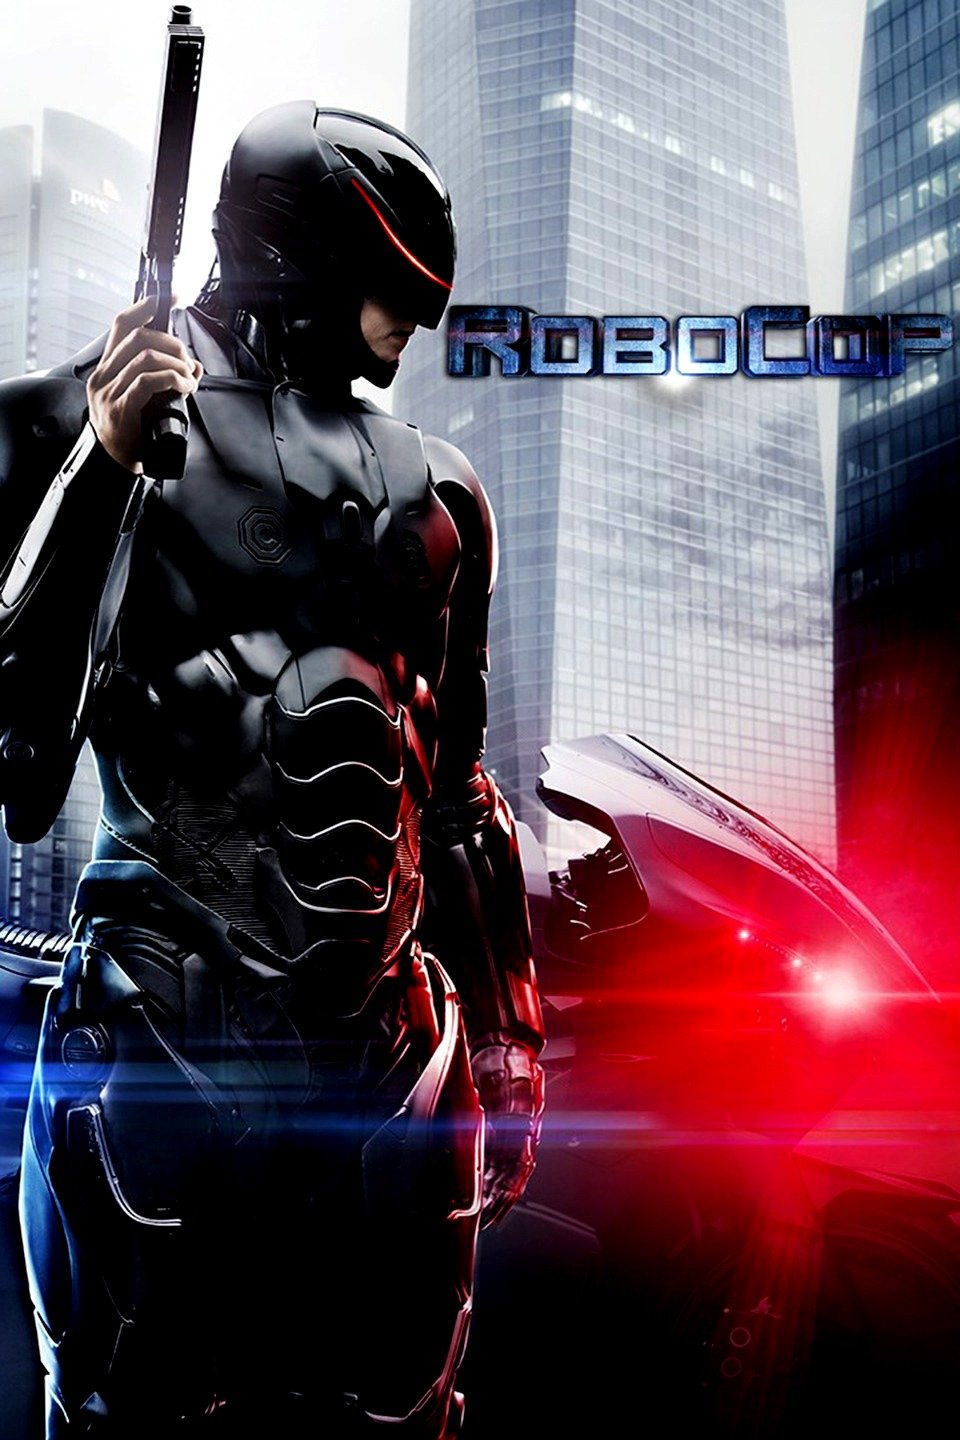 [MINI Super-HQ] RoboCop 4 (2014) โรโบคอป ภาค 4 [1080p] [พากย์ไทย 5.1 + เสียงอังกฤษ DTS] [บรรยายไทย + อังกฤษ] [เสียงไทย + ซับไทย]